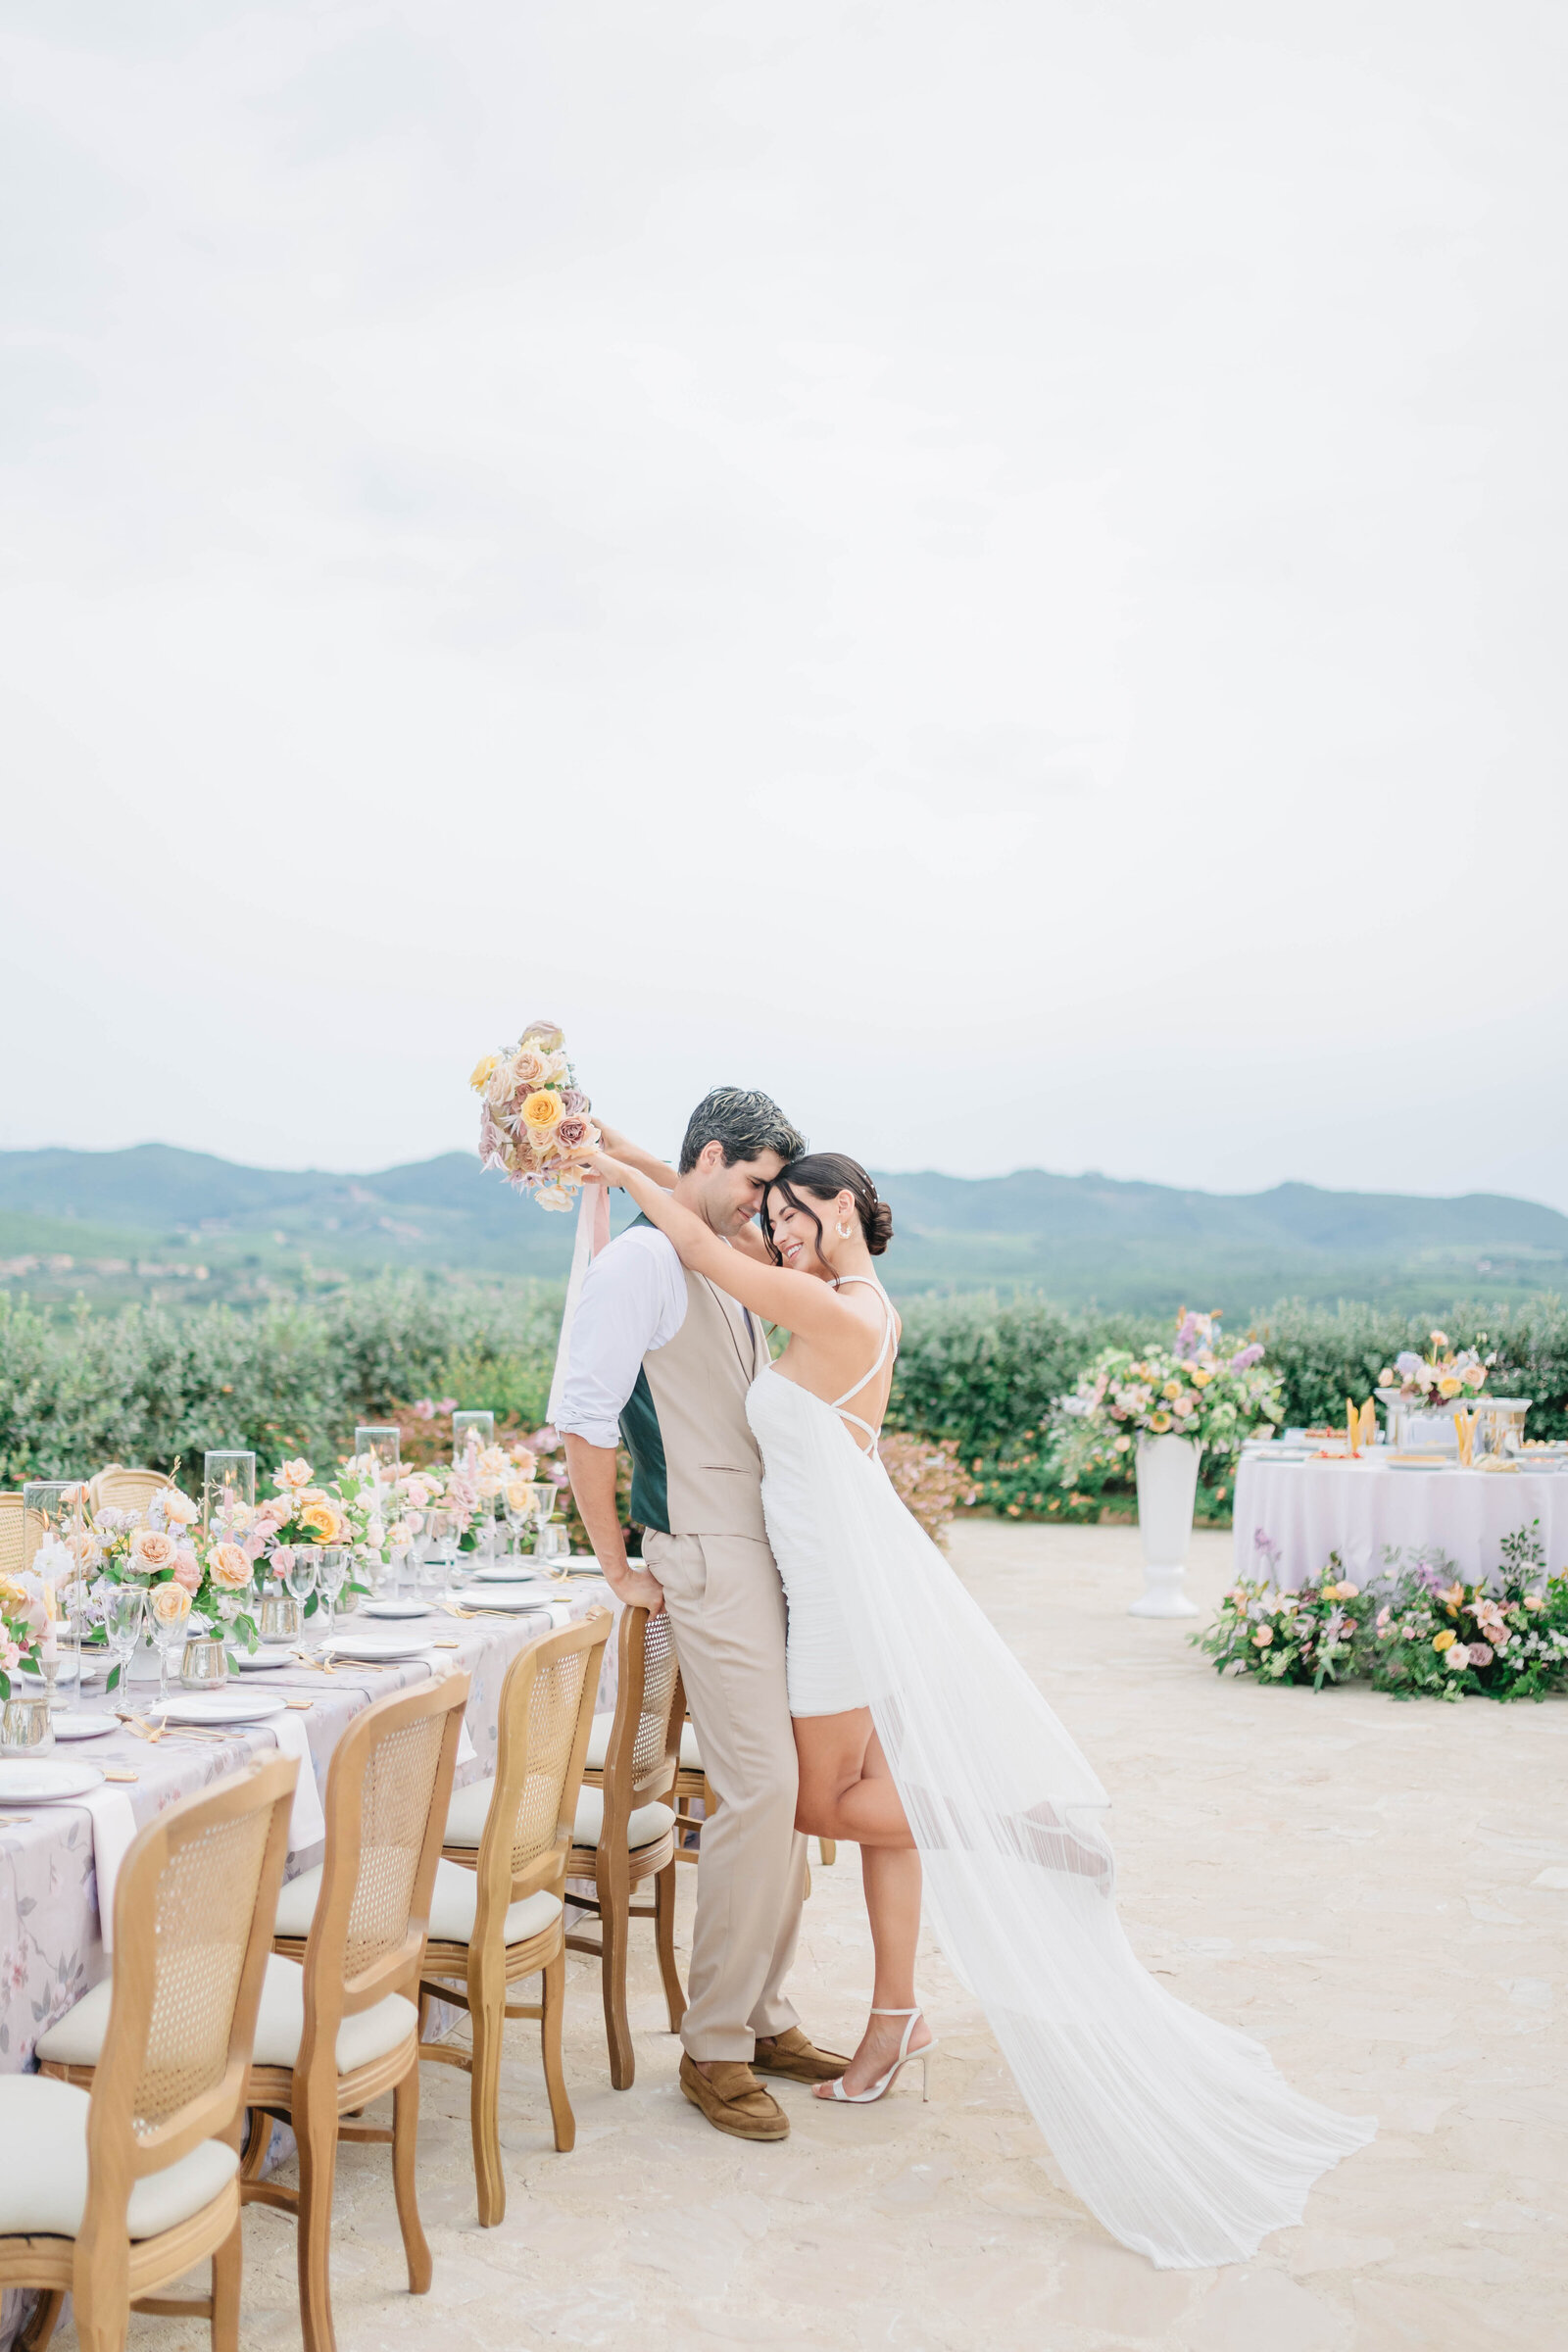 MorganeBallPhotography-Wedding-Tuscany-TheClubHouse-LovelyInstants-02-WelcomeDinner-couple-lq-157-2928